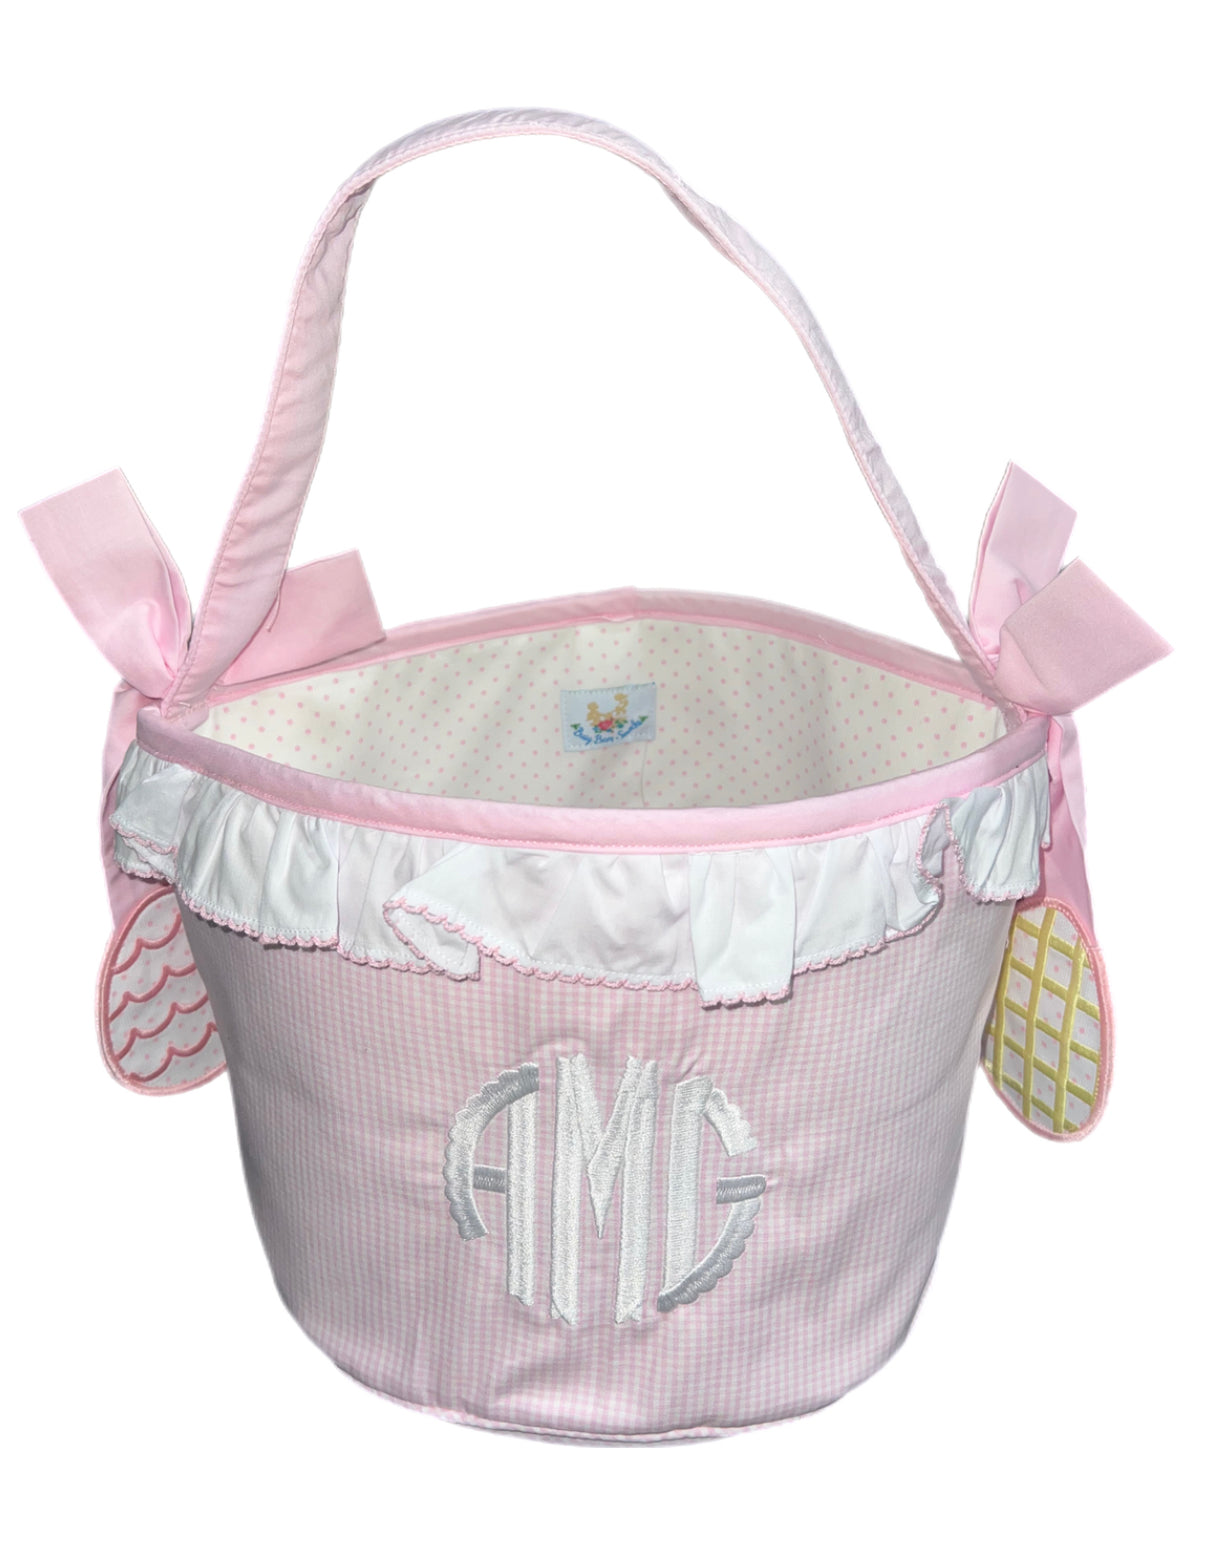 RTS: Easter Basket Collection: Easter Eggs- Girls Basket “AMG”